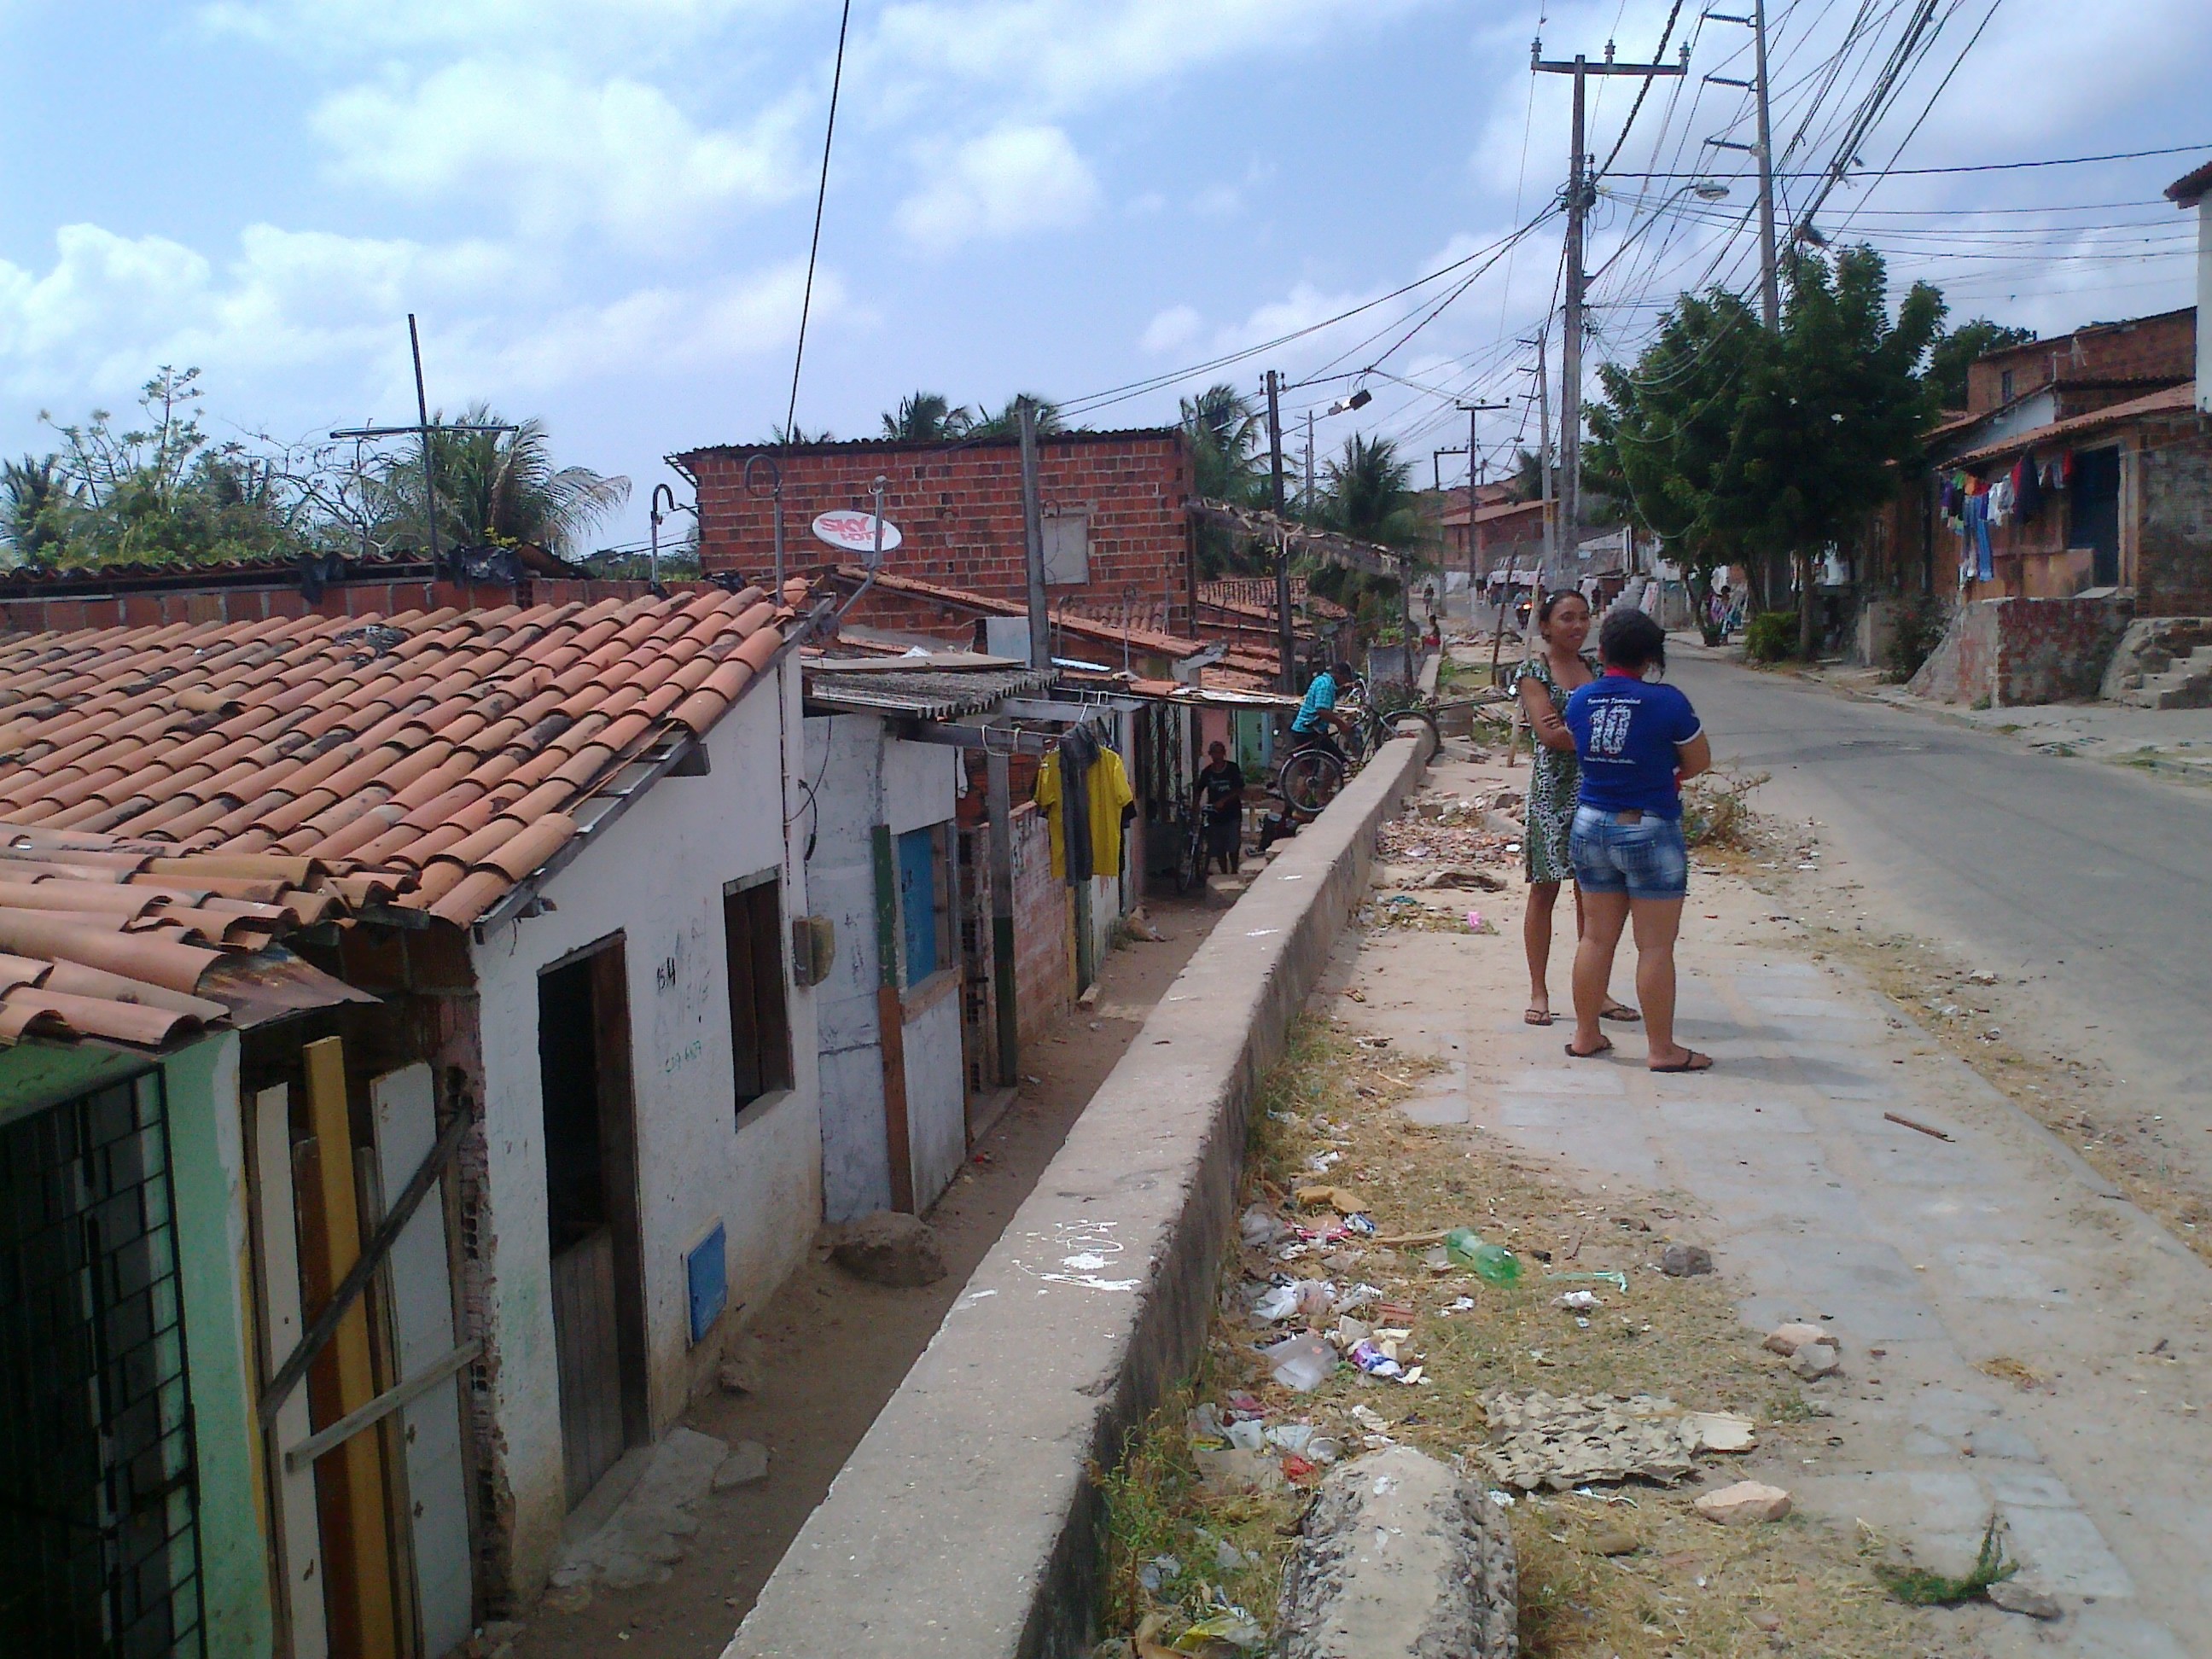 Datei:Favela.jpg